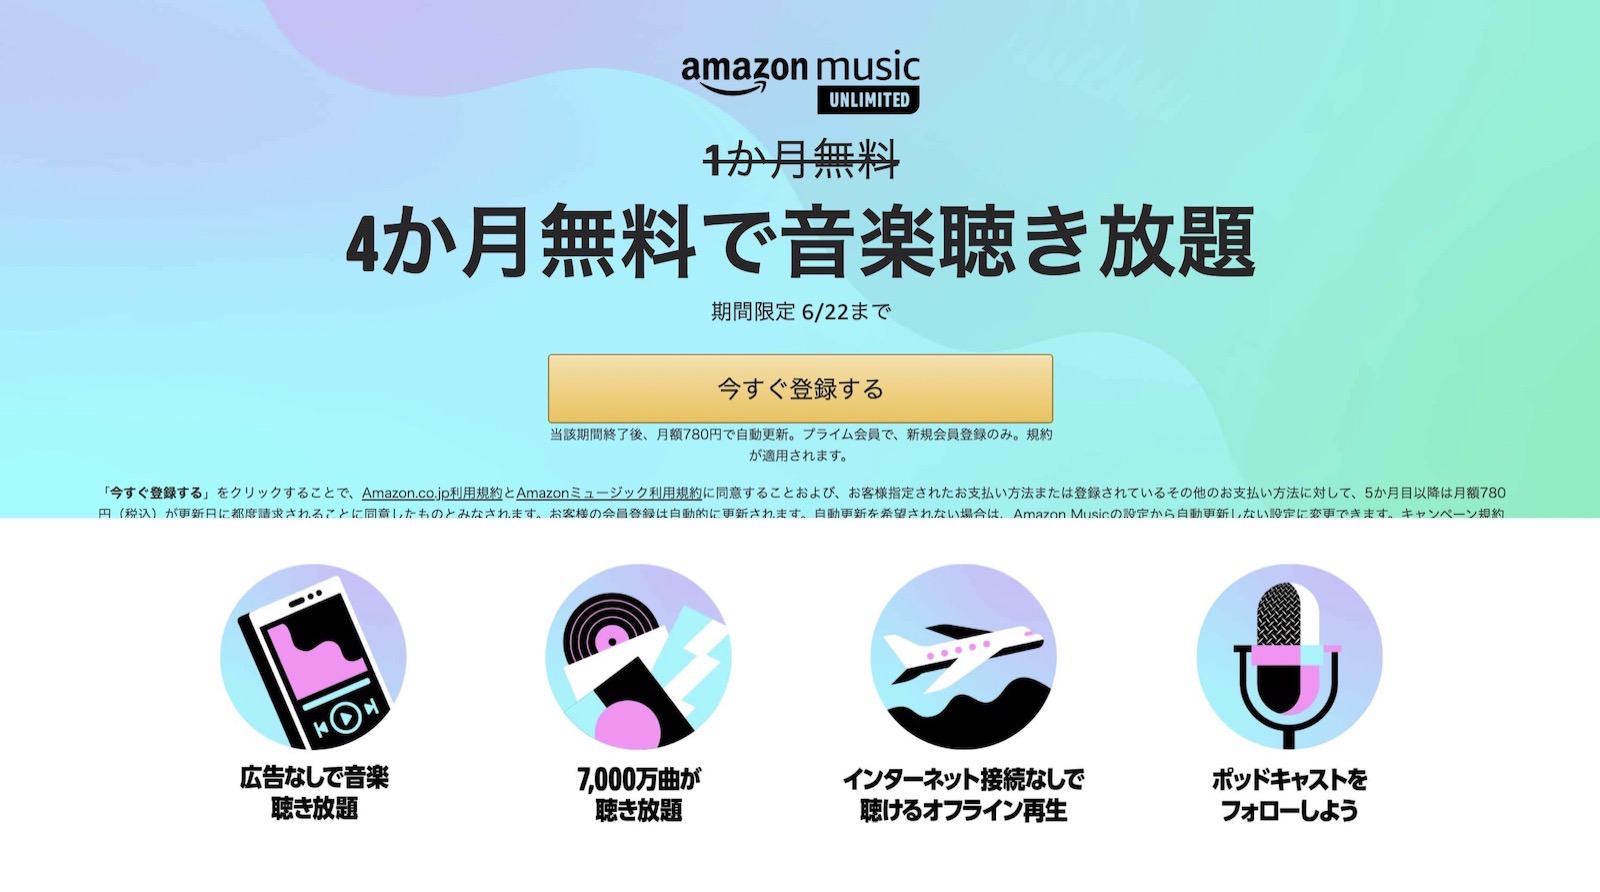 Amazon music unlimited campaign